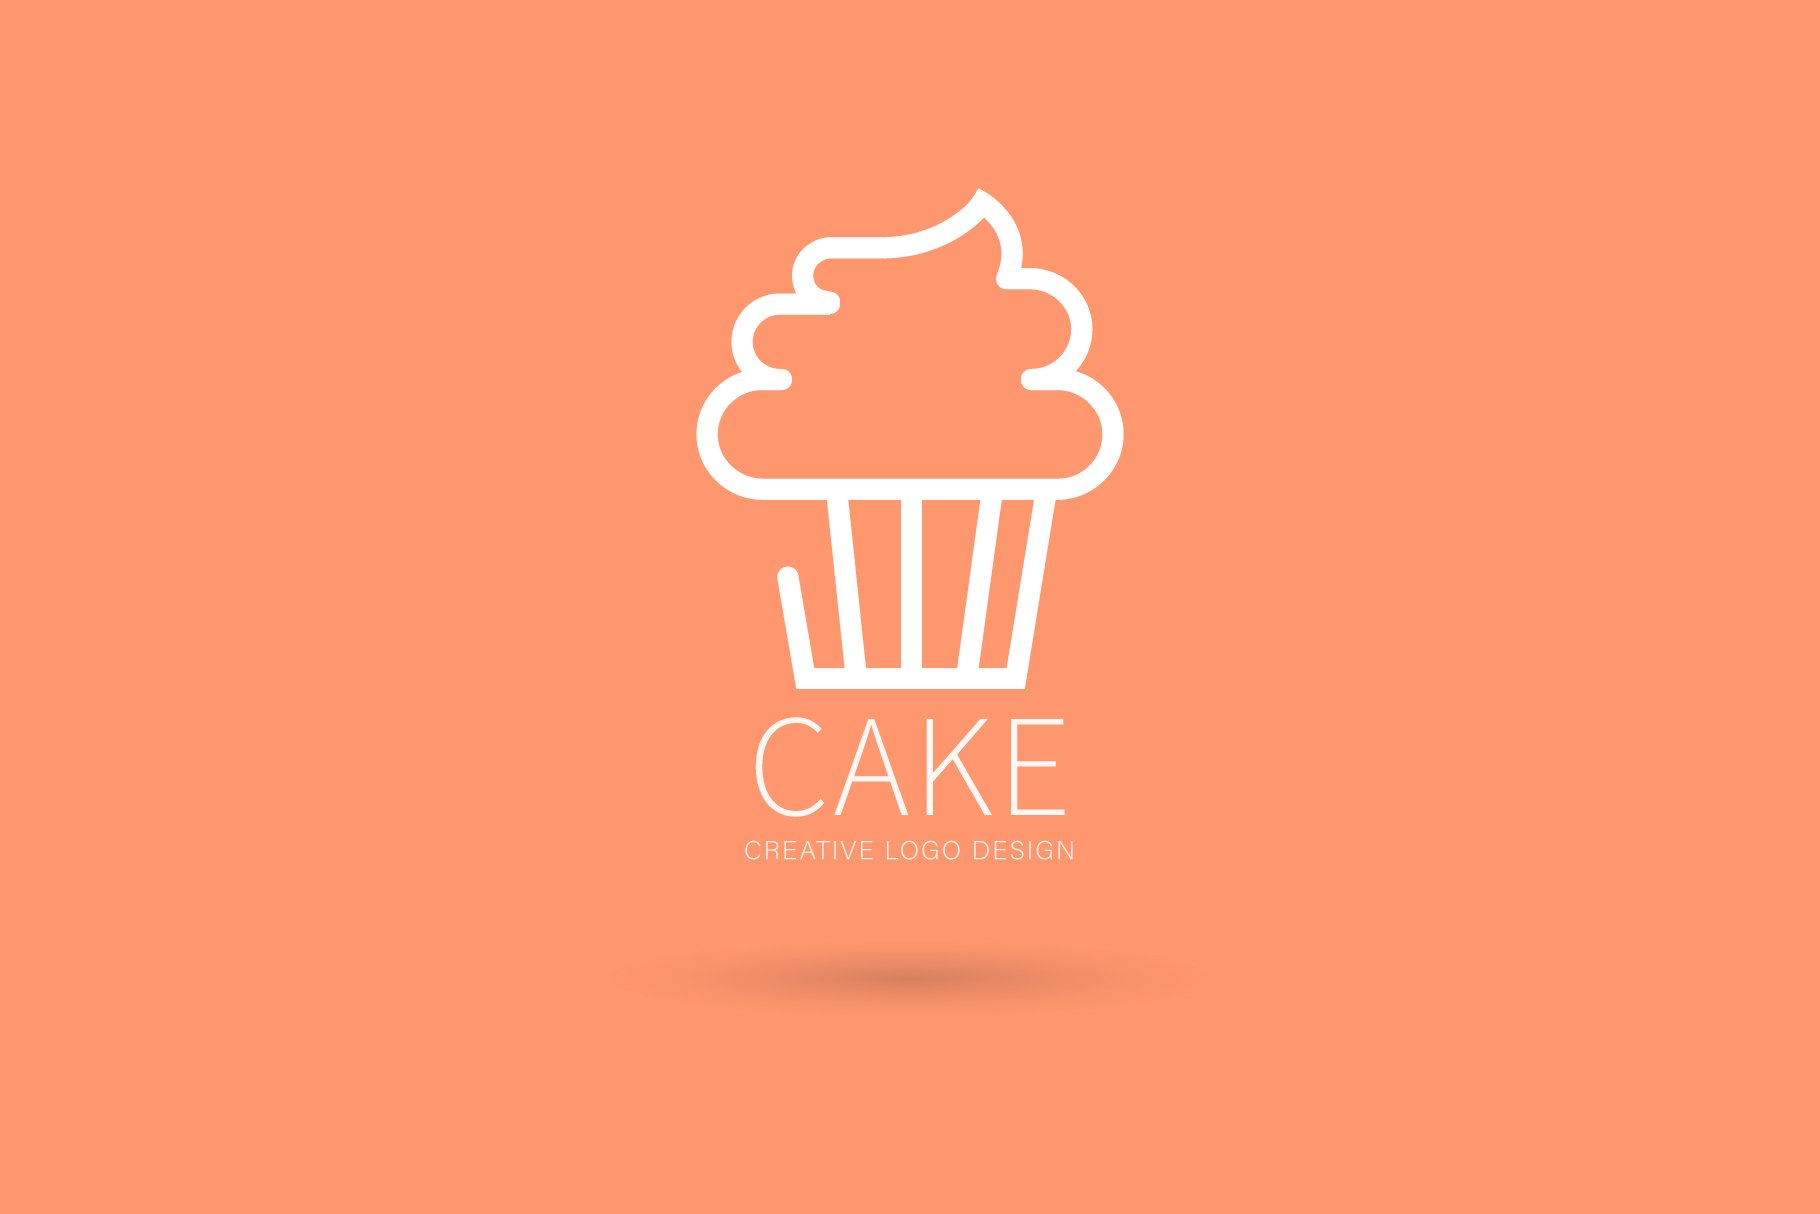 Cake logo preview image.